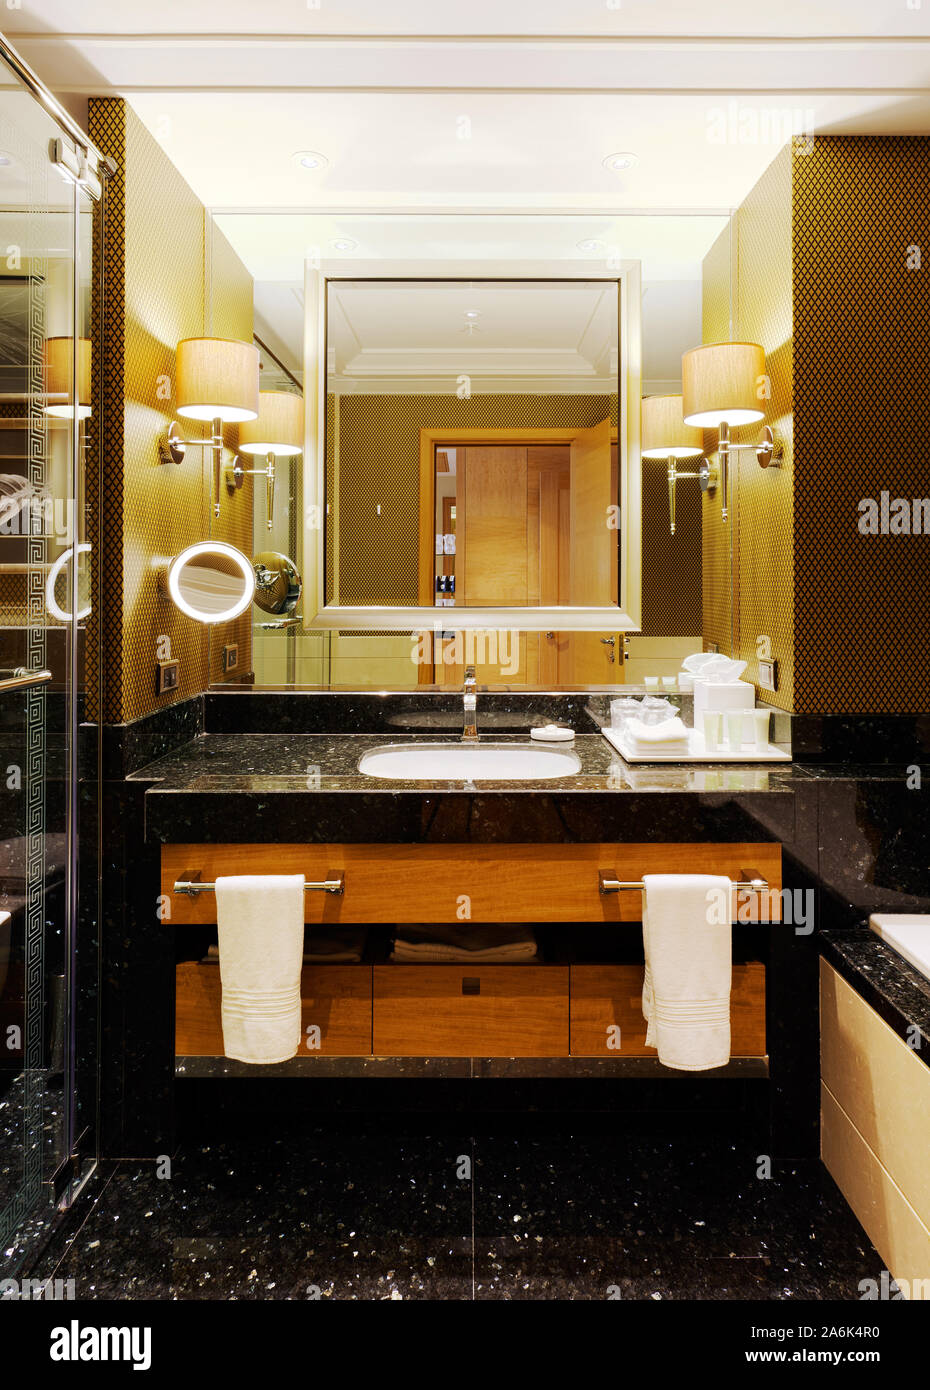 Luxury hotel bathroom interior with modern style decoration Stock Photo